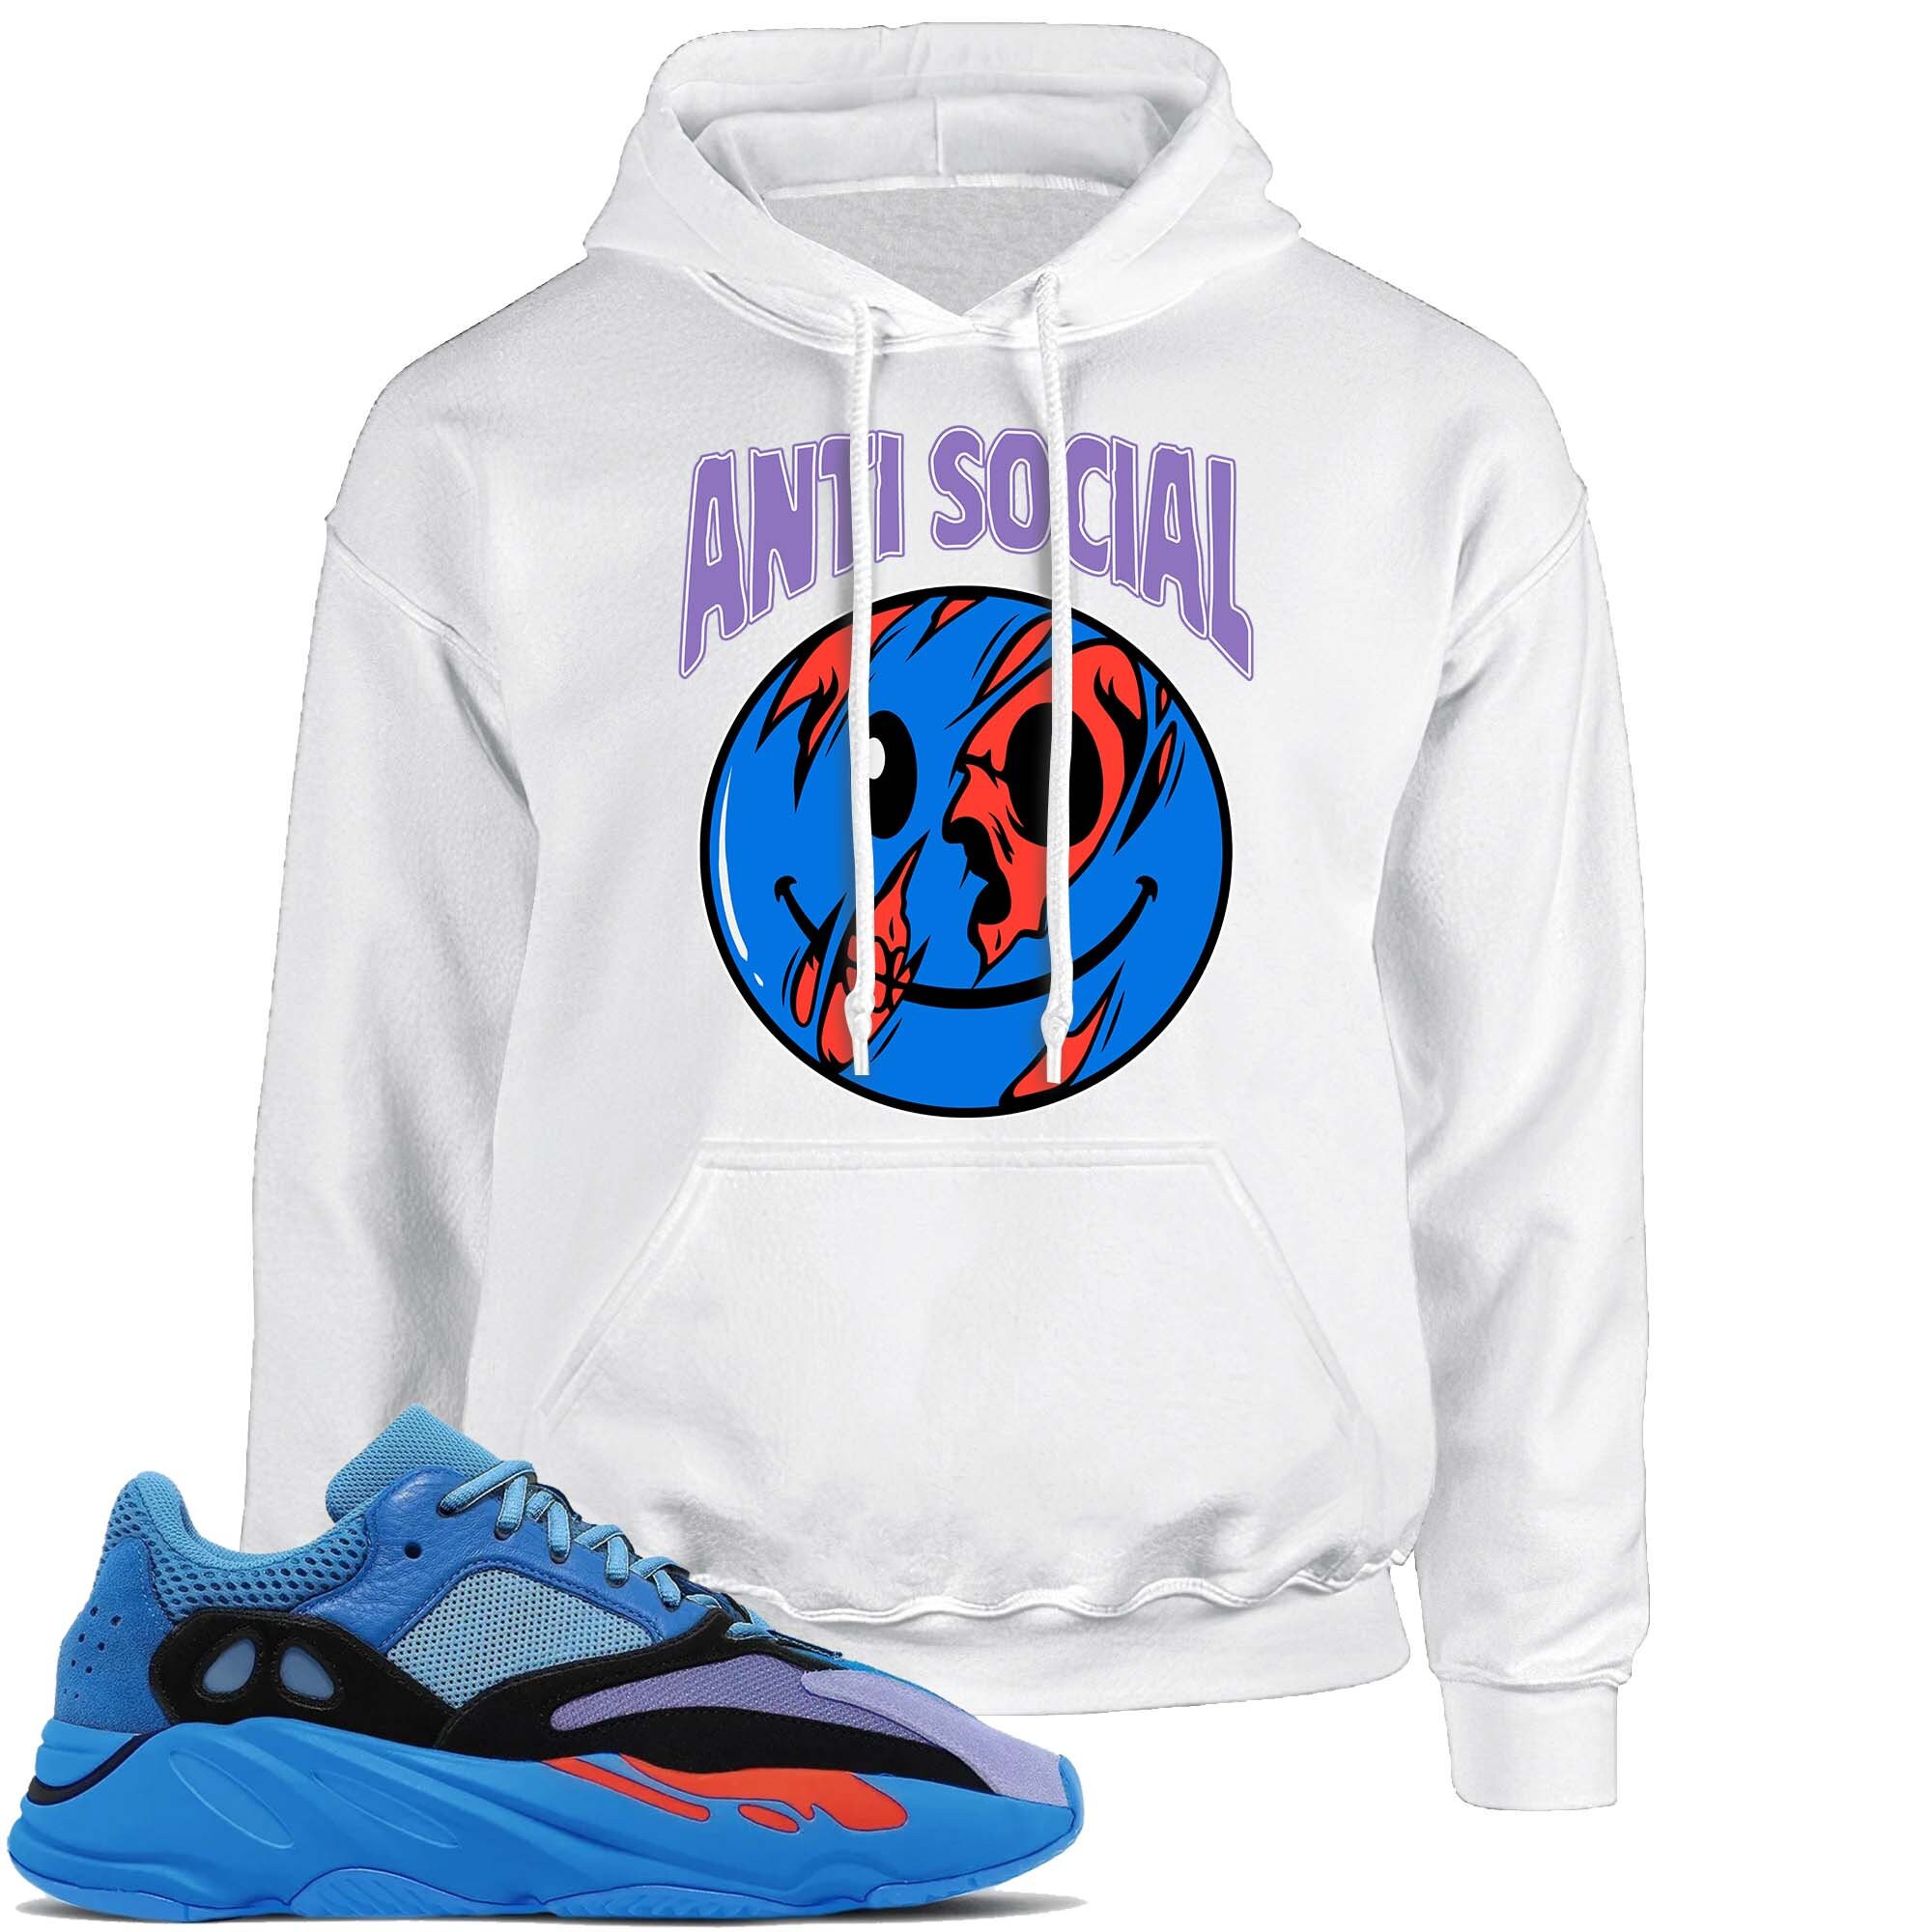 Anti Unisex Sweatshirt Pullover Hoodie to Match Yeezy Boost 700 Hi Res Blue Sneakers | Yeezy Hi-Res Blue 700s Sweatshirt Hoodie